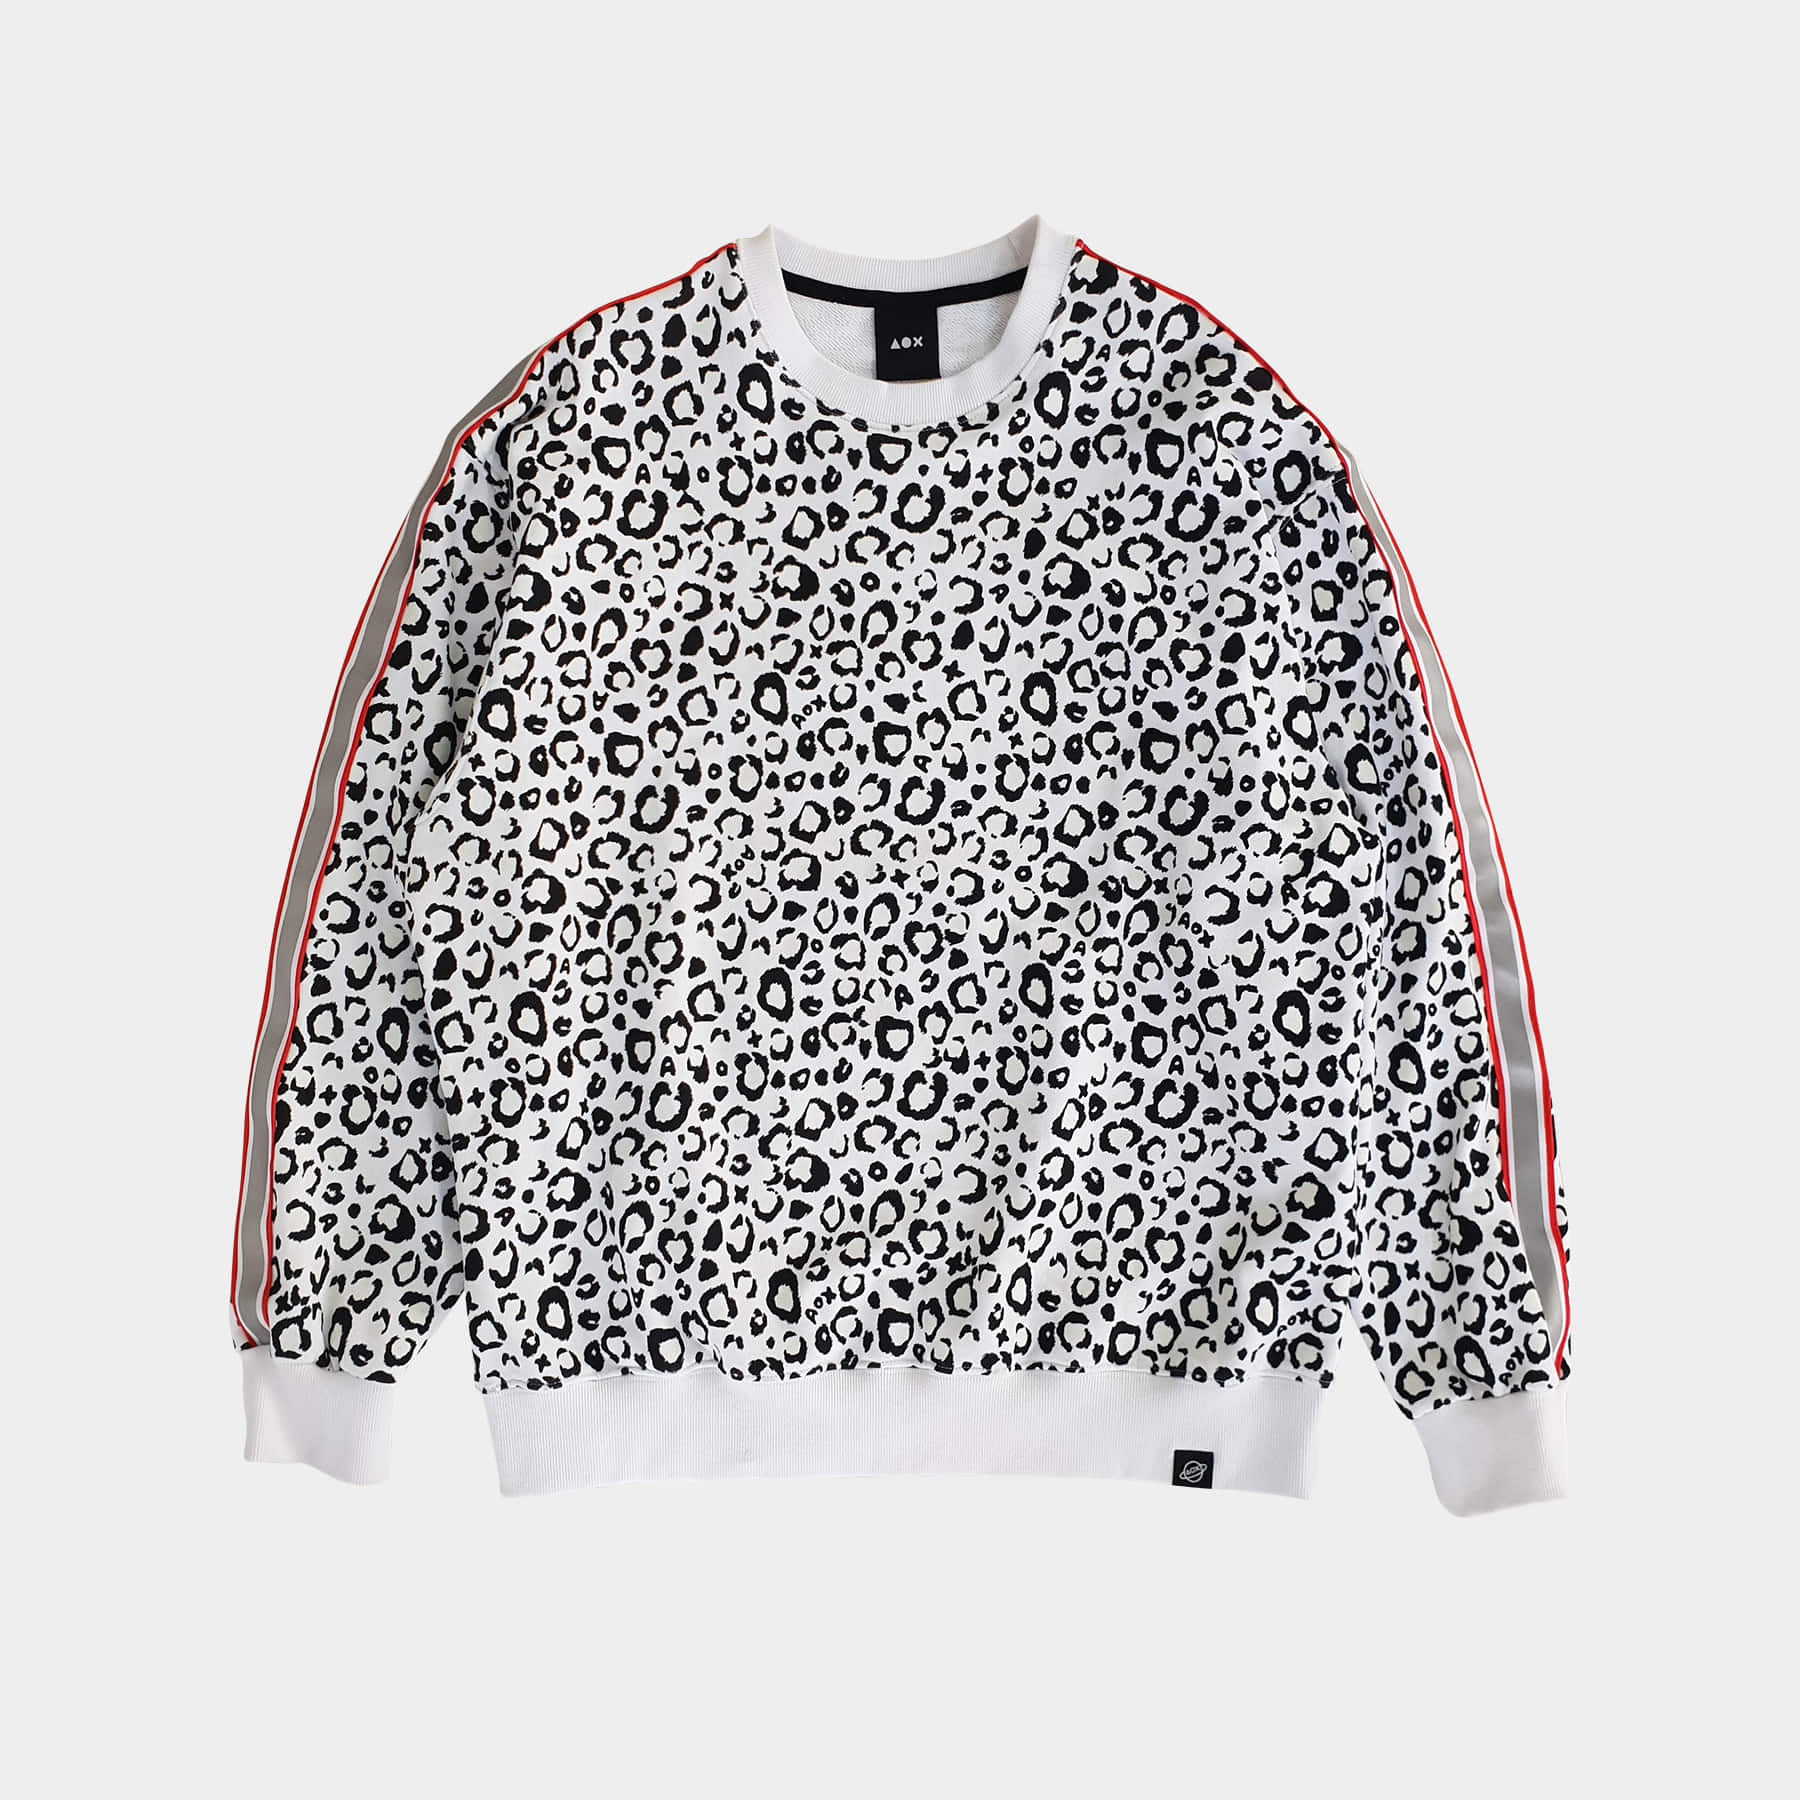 Leopard Sweatshirt (White) *reflective tape